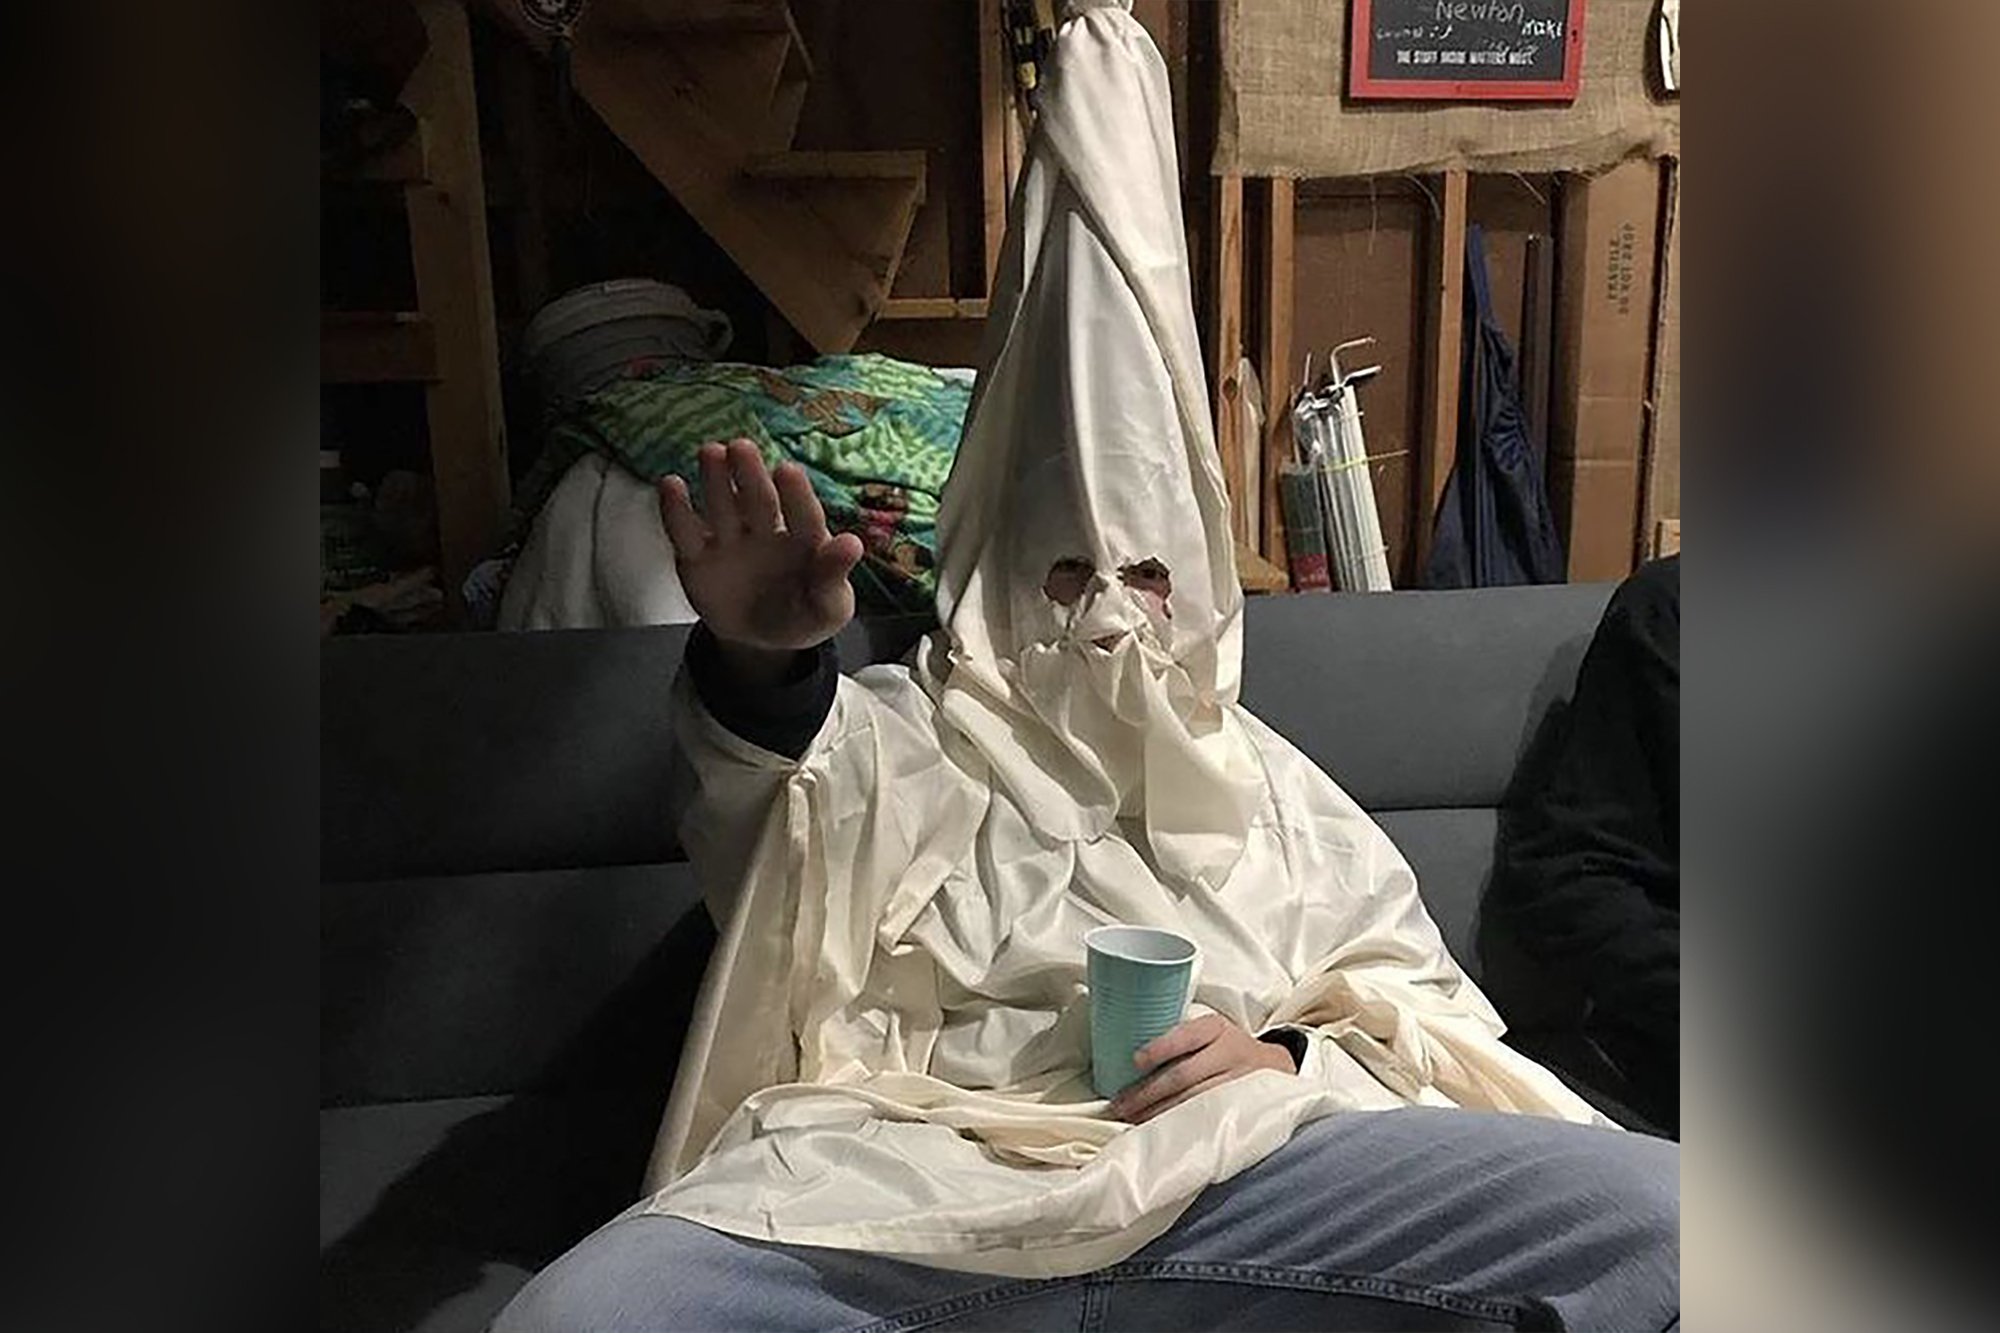 School investigates photos of teens in KKK robes